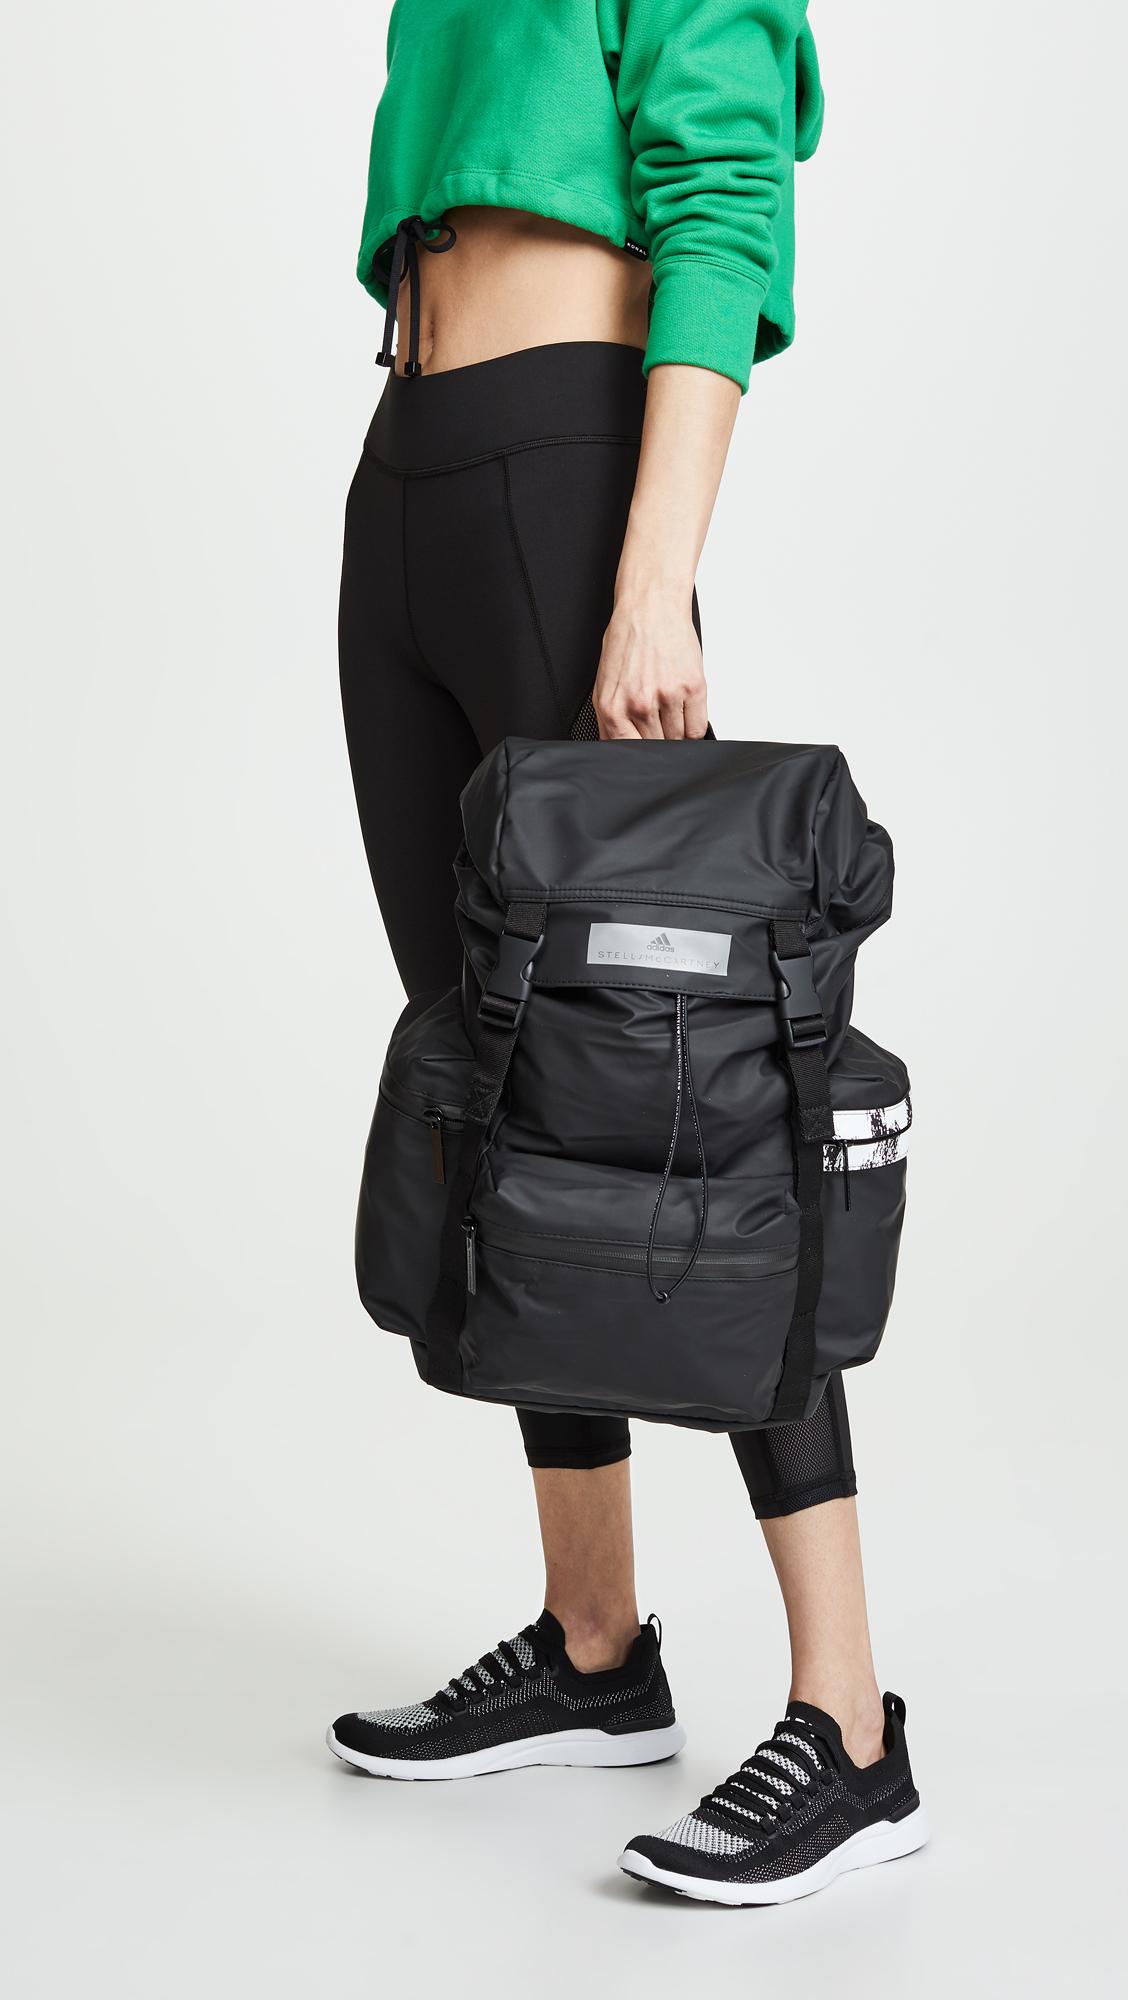 adidas By Stella McCartney Backpack in Black/White (Black) | Lyst